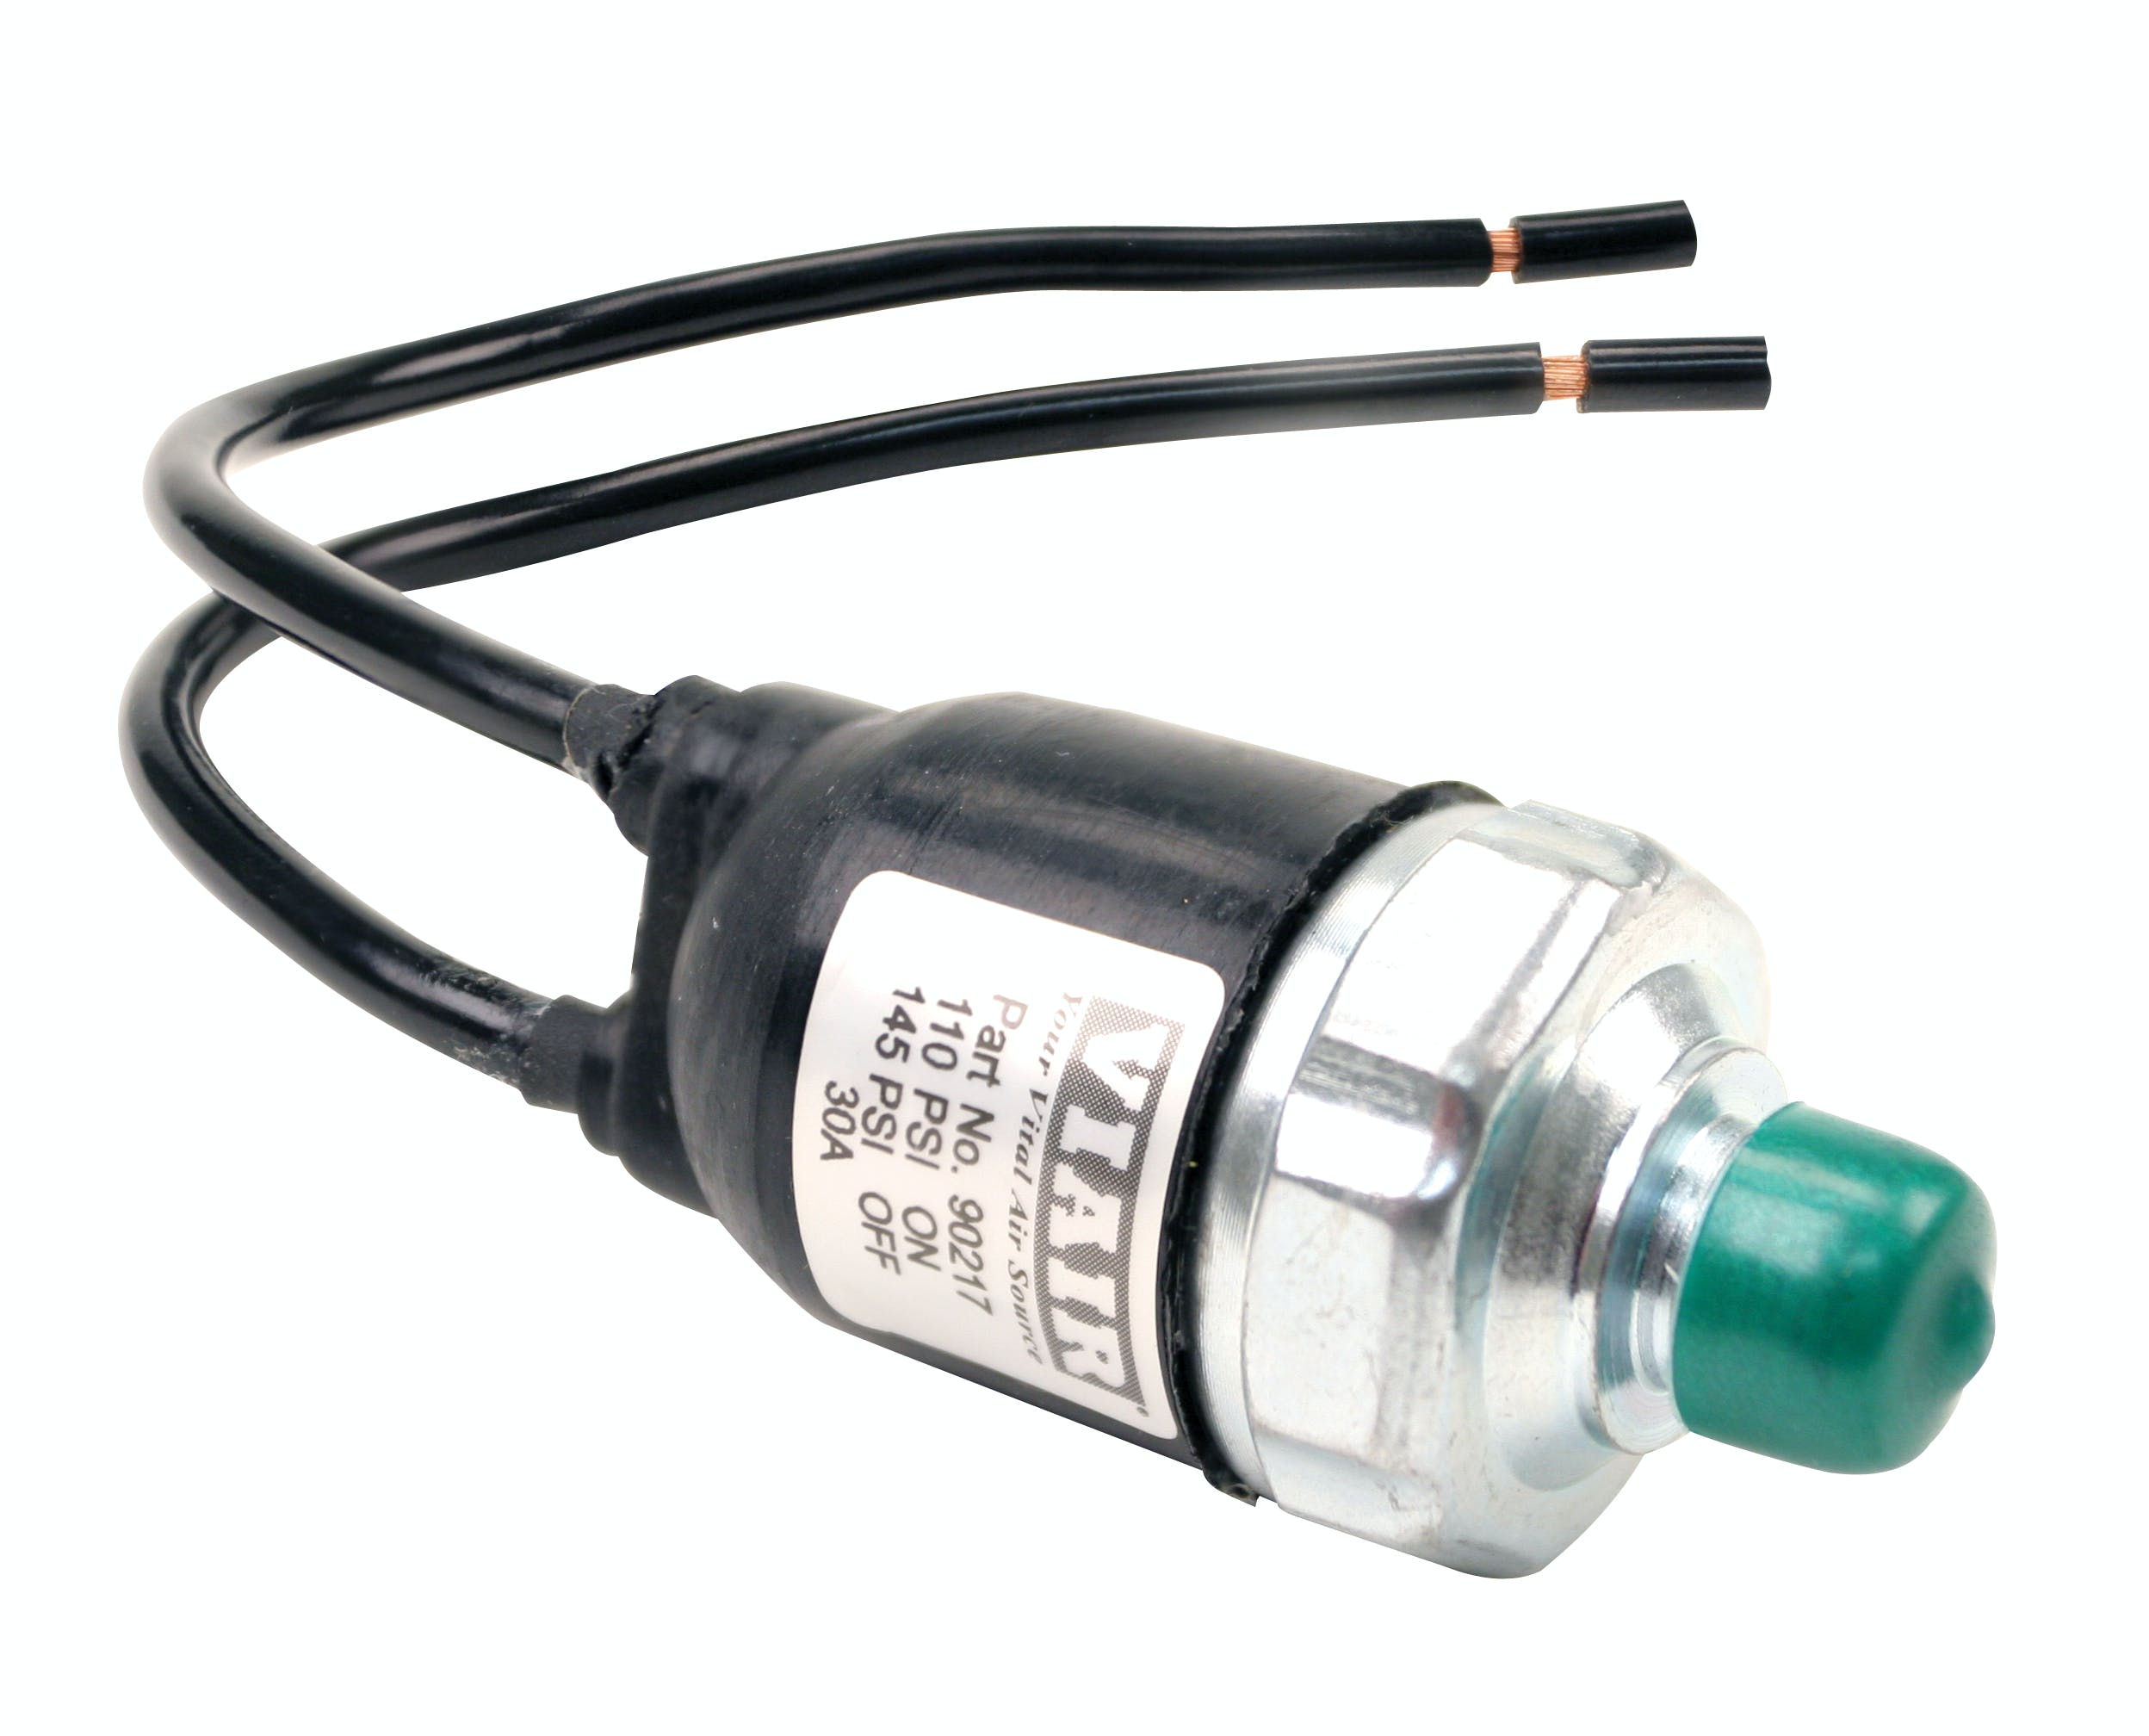 VIAIR 90217 Sealed Pressure Switch  1/8in M NPT Port  12 GA Lead Wires  110 psi On  145